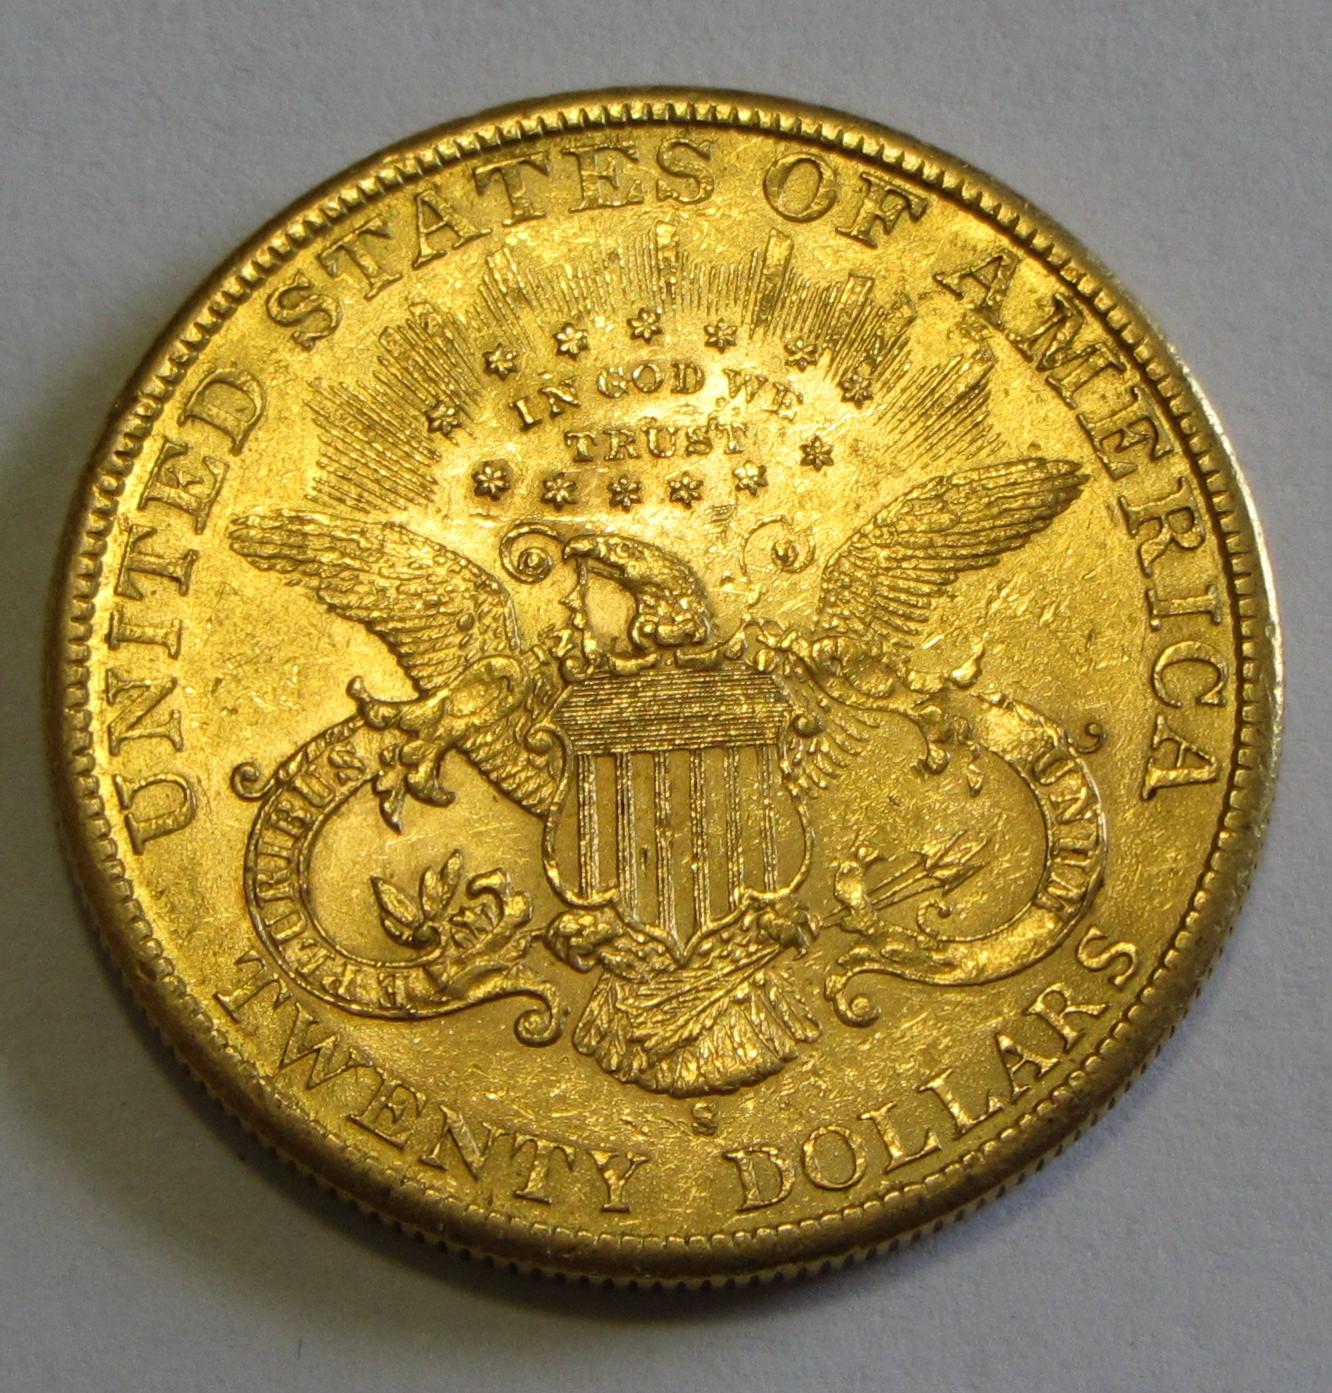 $20 GOLD DOUBLE LIBERTY EAGLE 1900